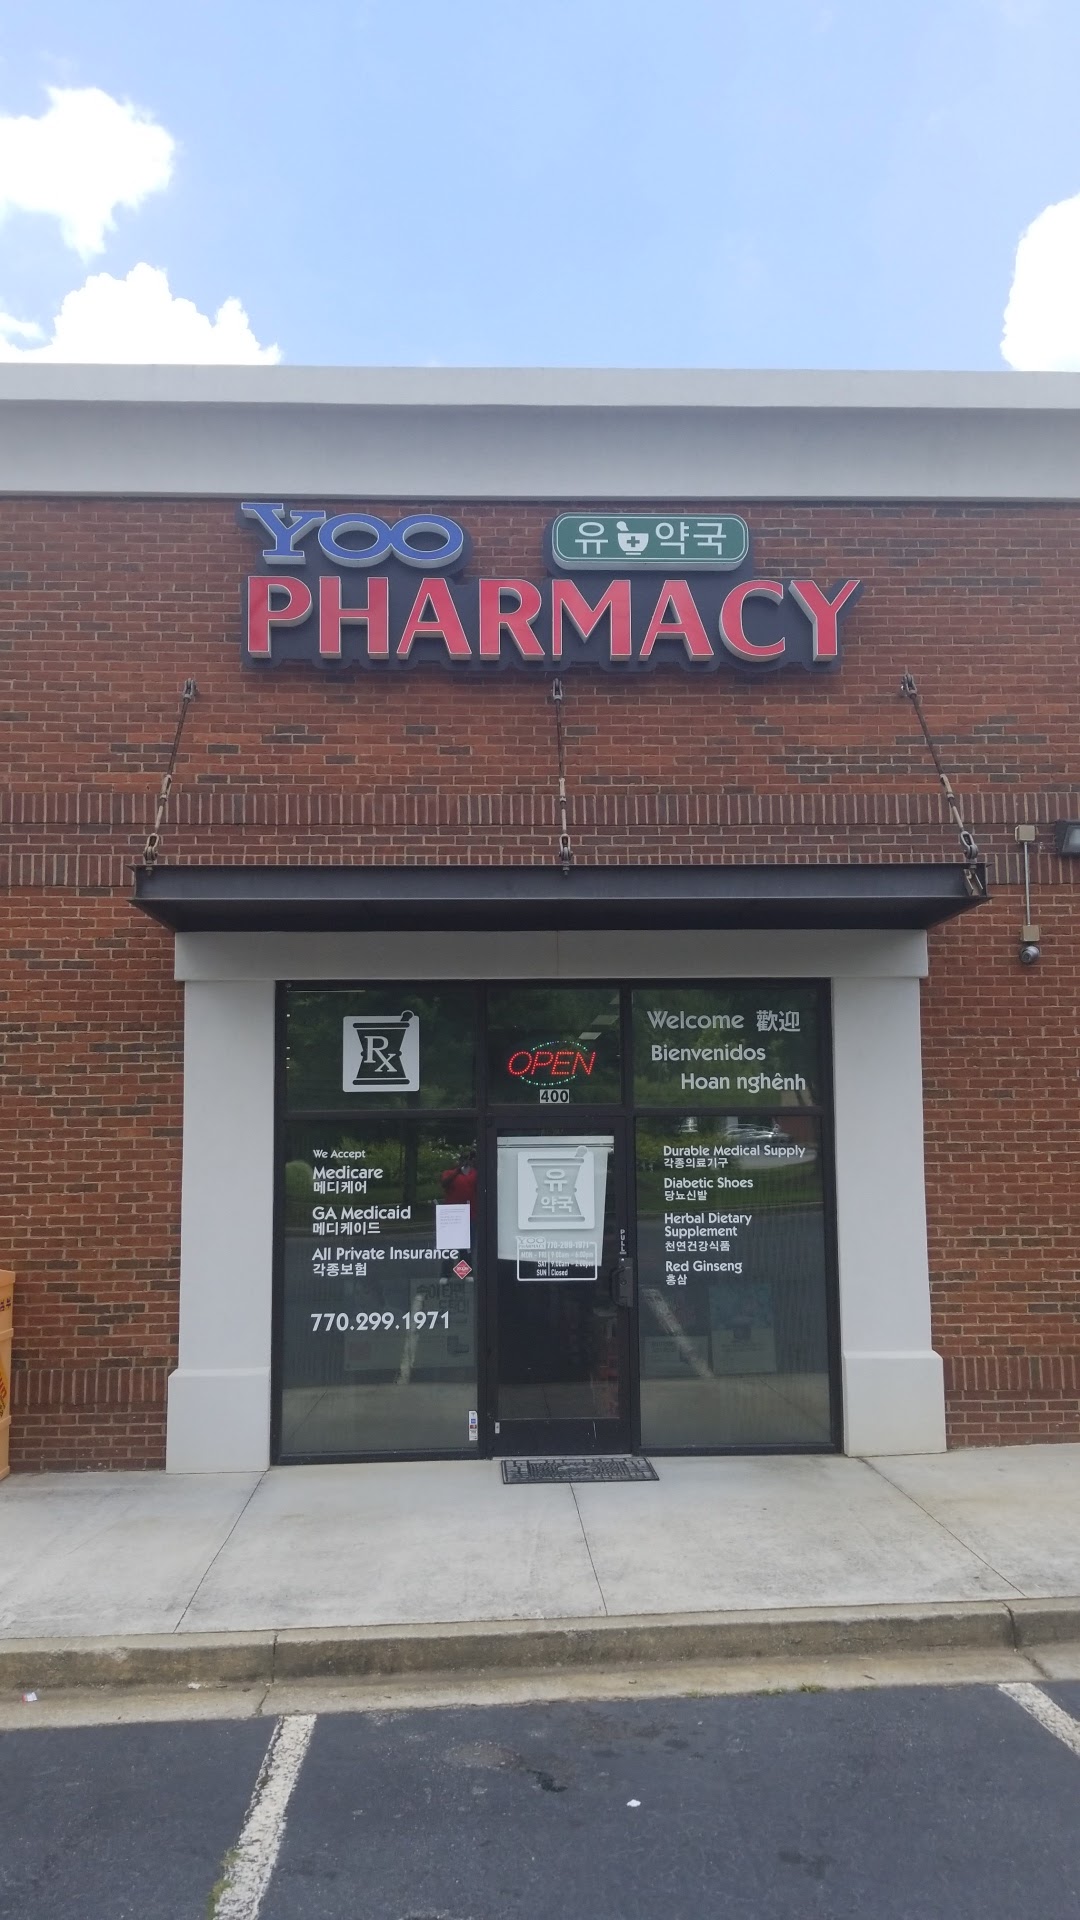 Yoo Pharmacy